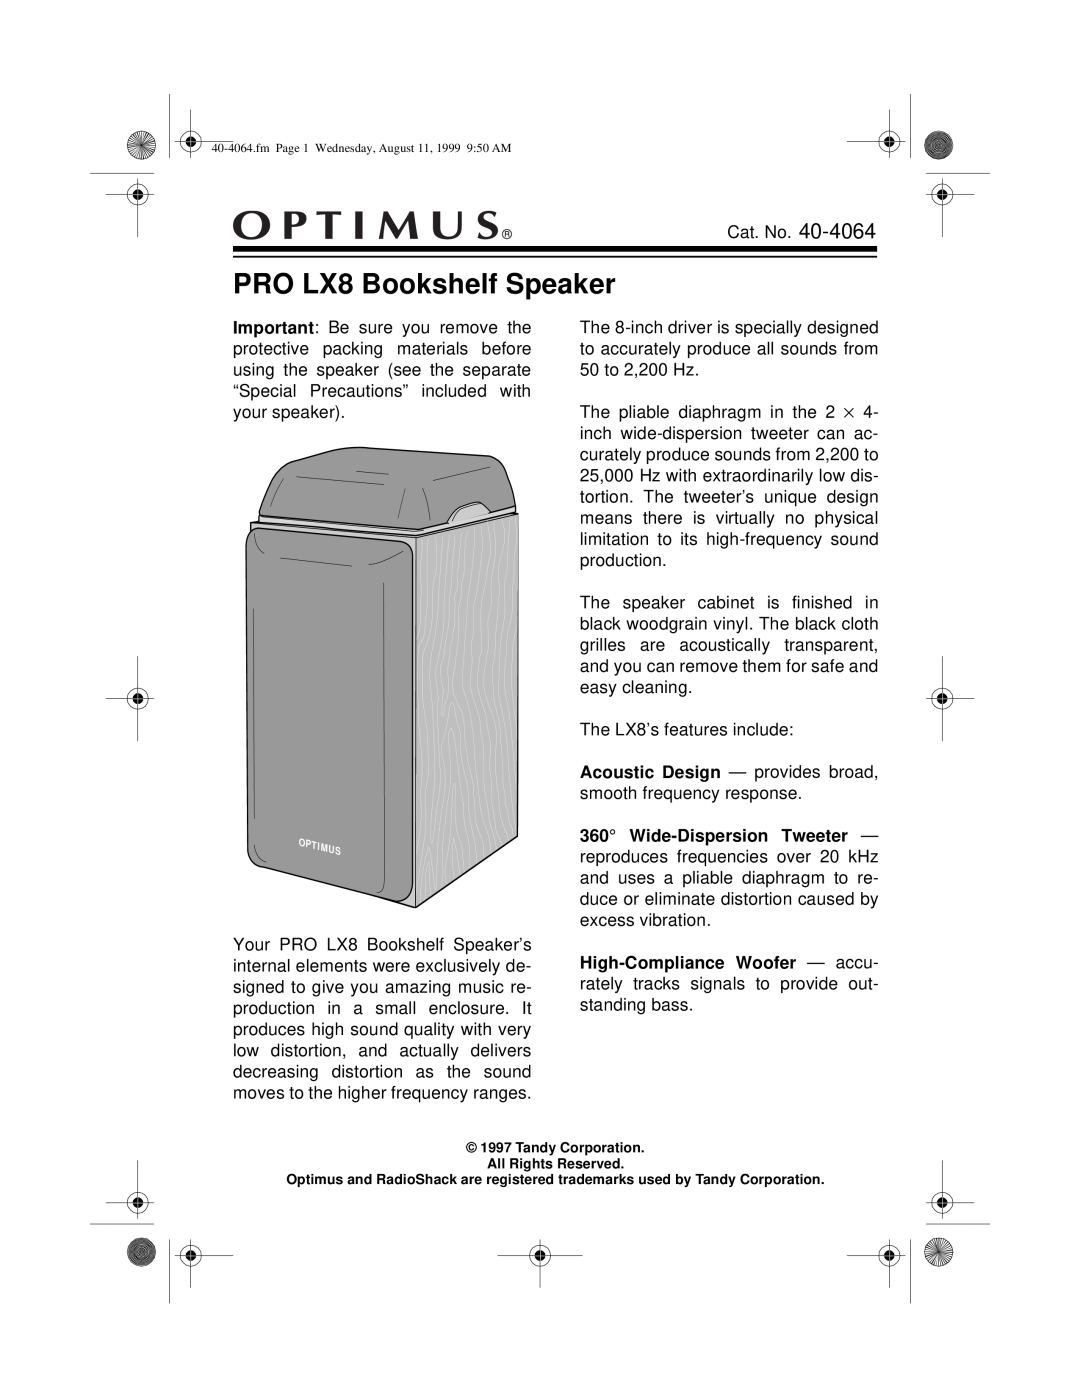 Optimus manual PRO LX8 Bookshelf Speaker 